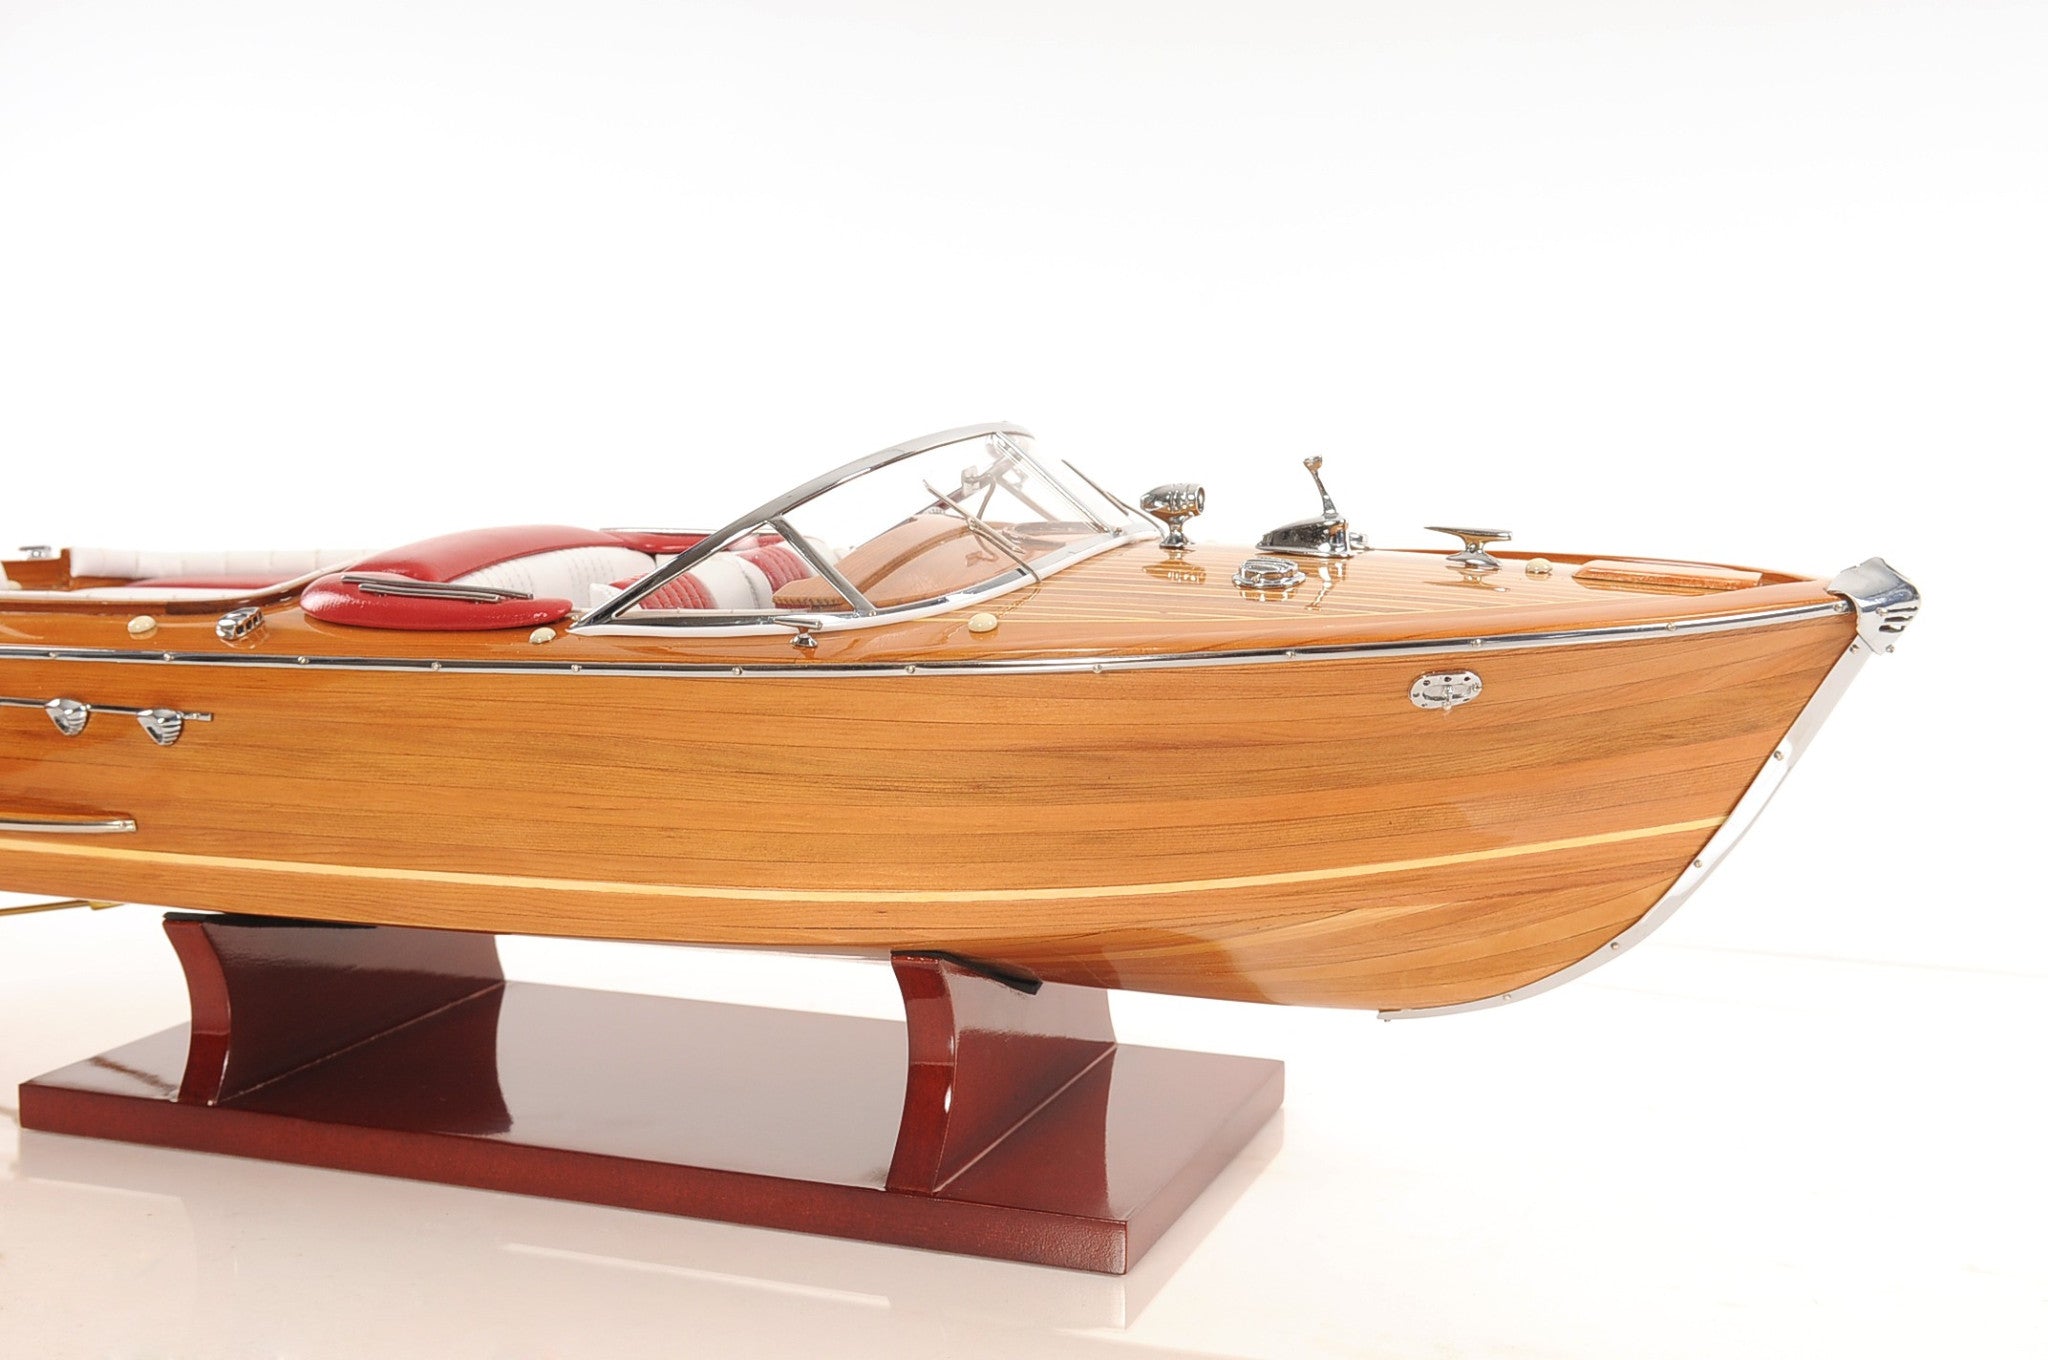 7" Wood Brown Riva Aqurama Speedboat Hand Painted Decorative Boat